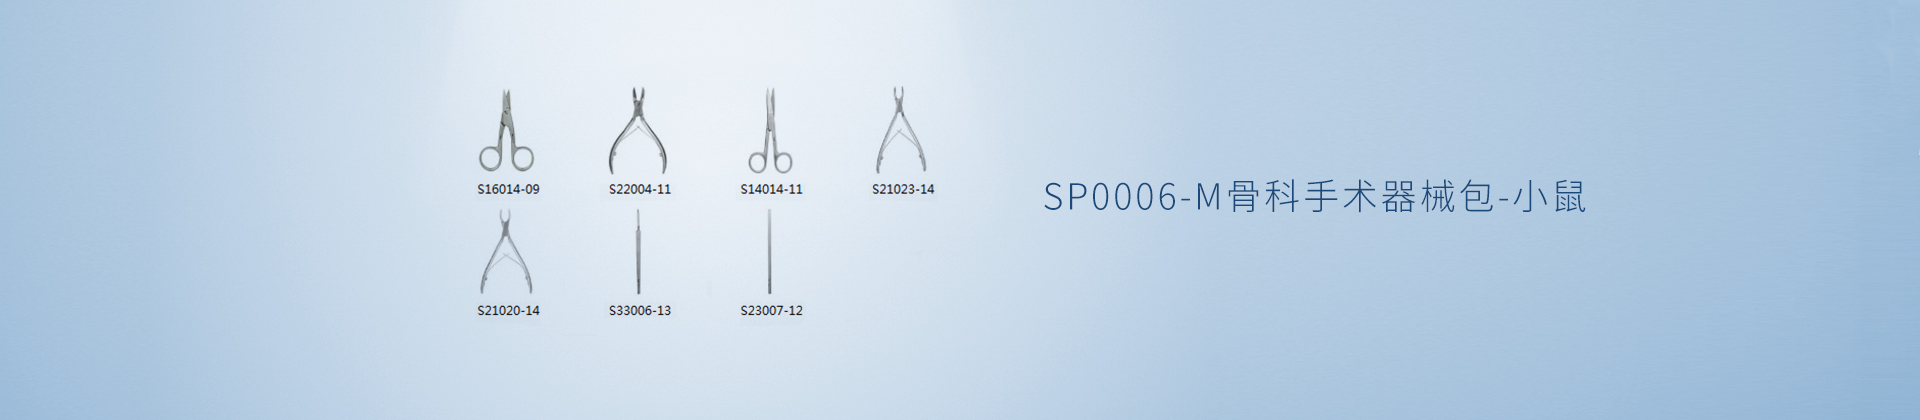 SP0006-M骨科手术器械包-小鼠